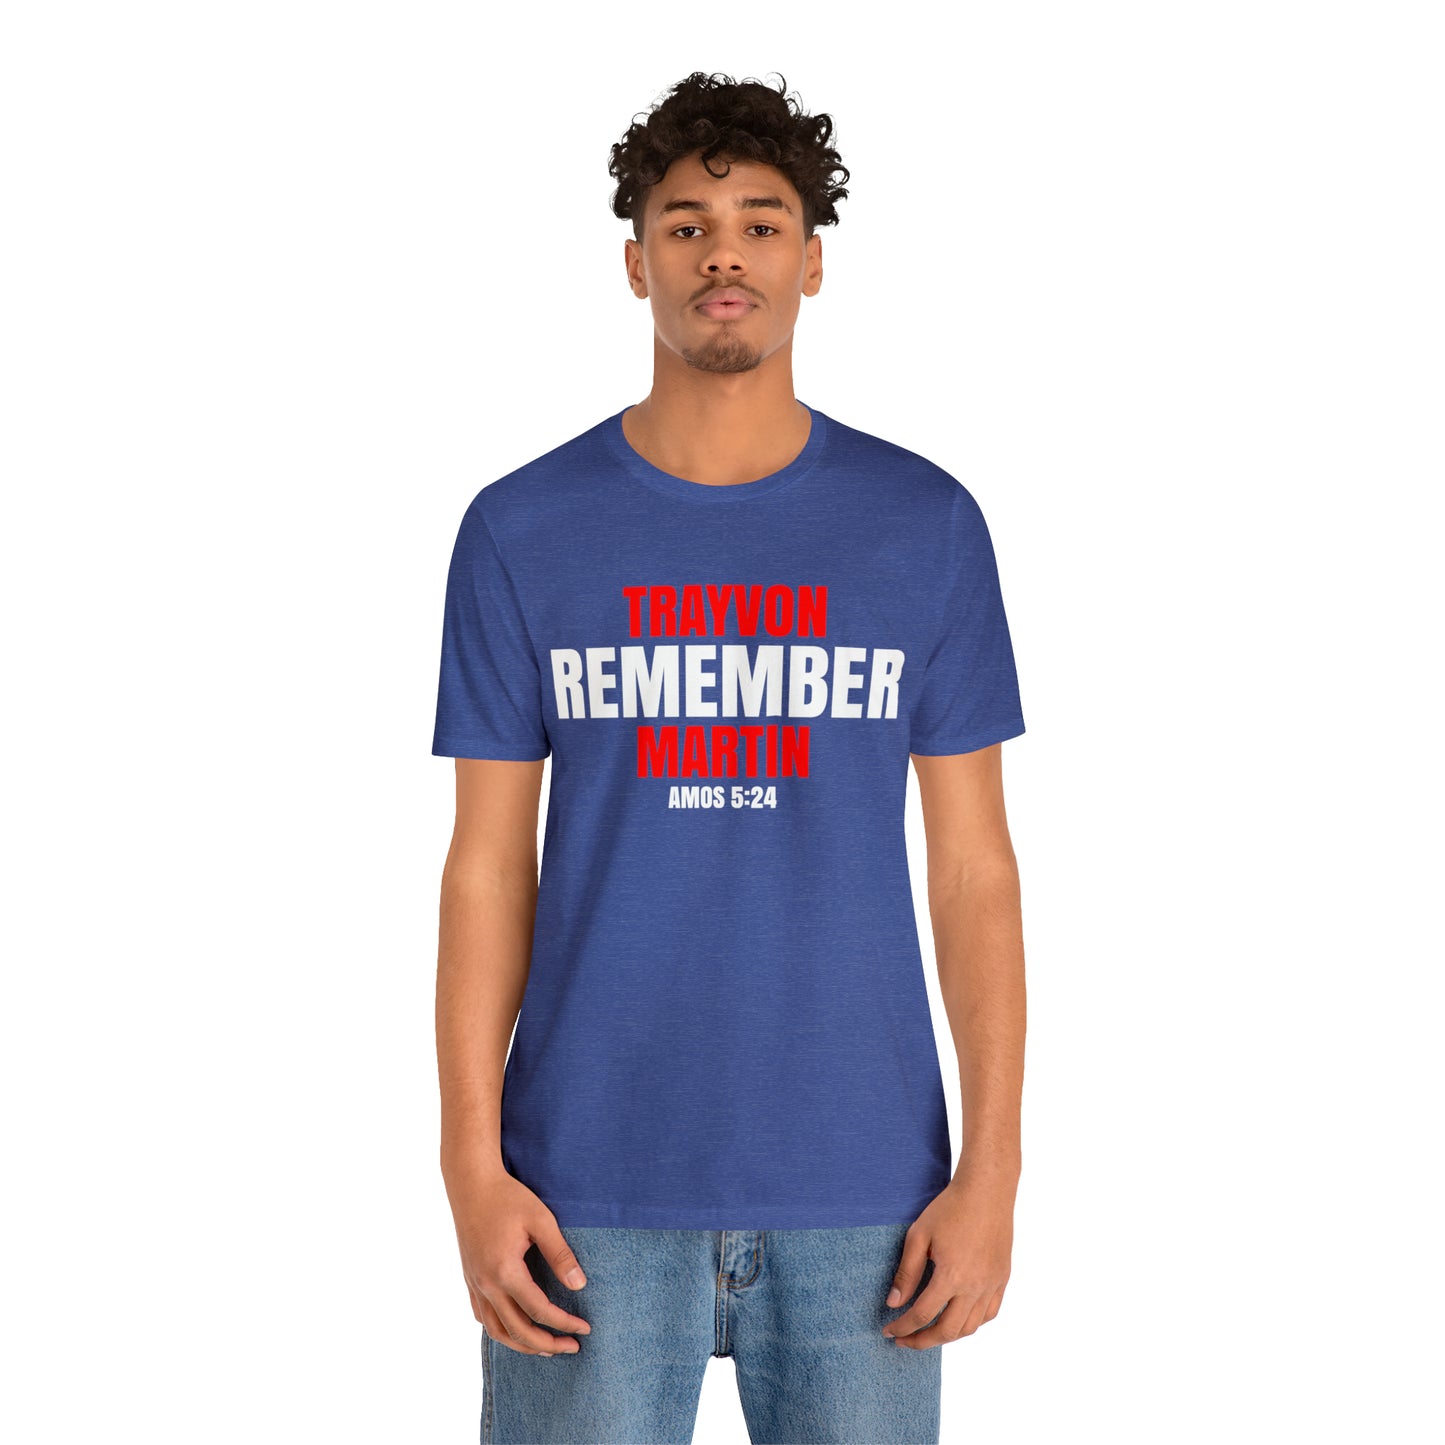 The Remember Series-Trayvon Martin-Unisex Jersey Short Sleeve Tee